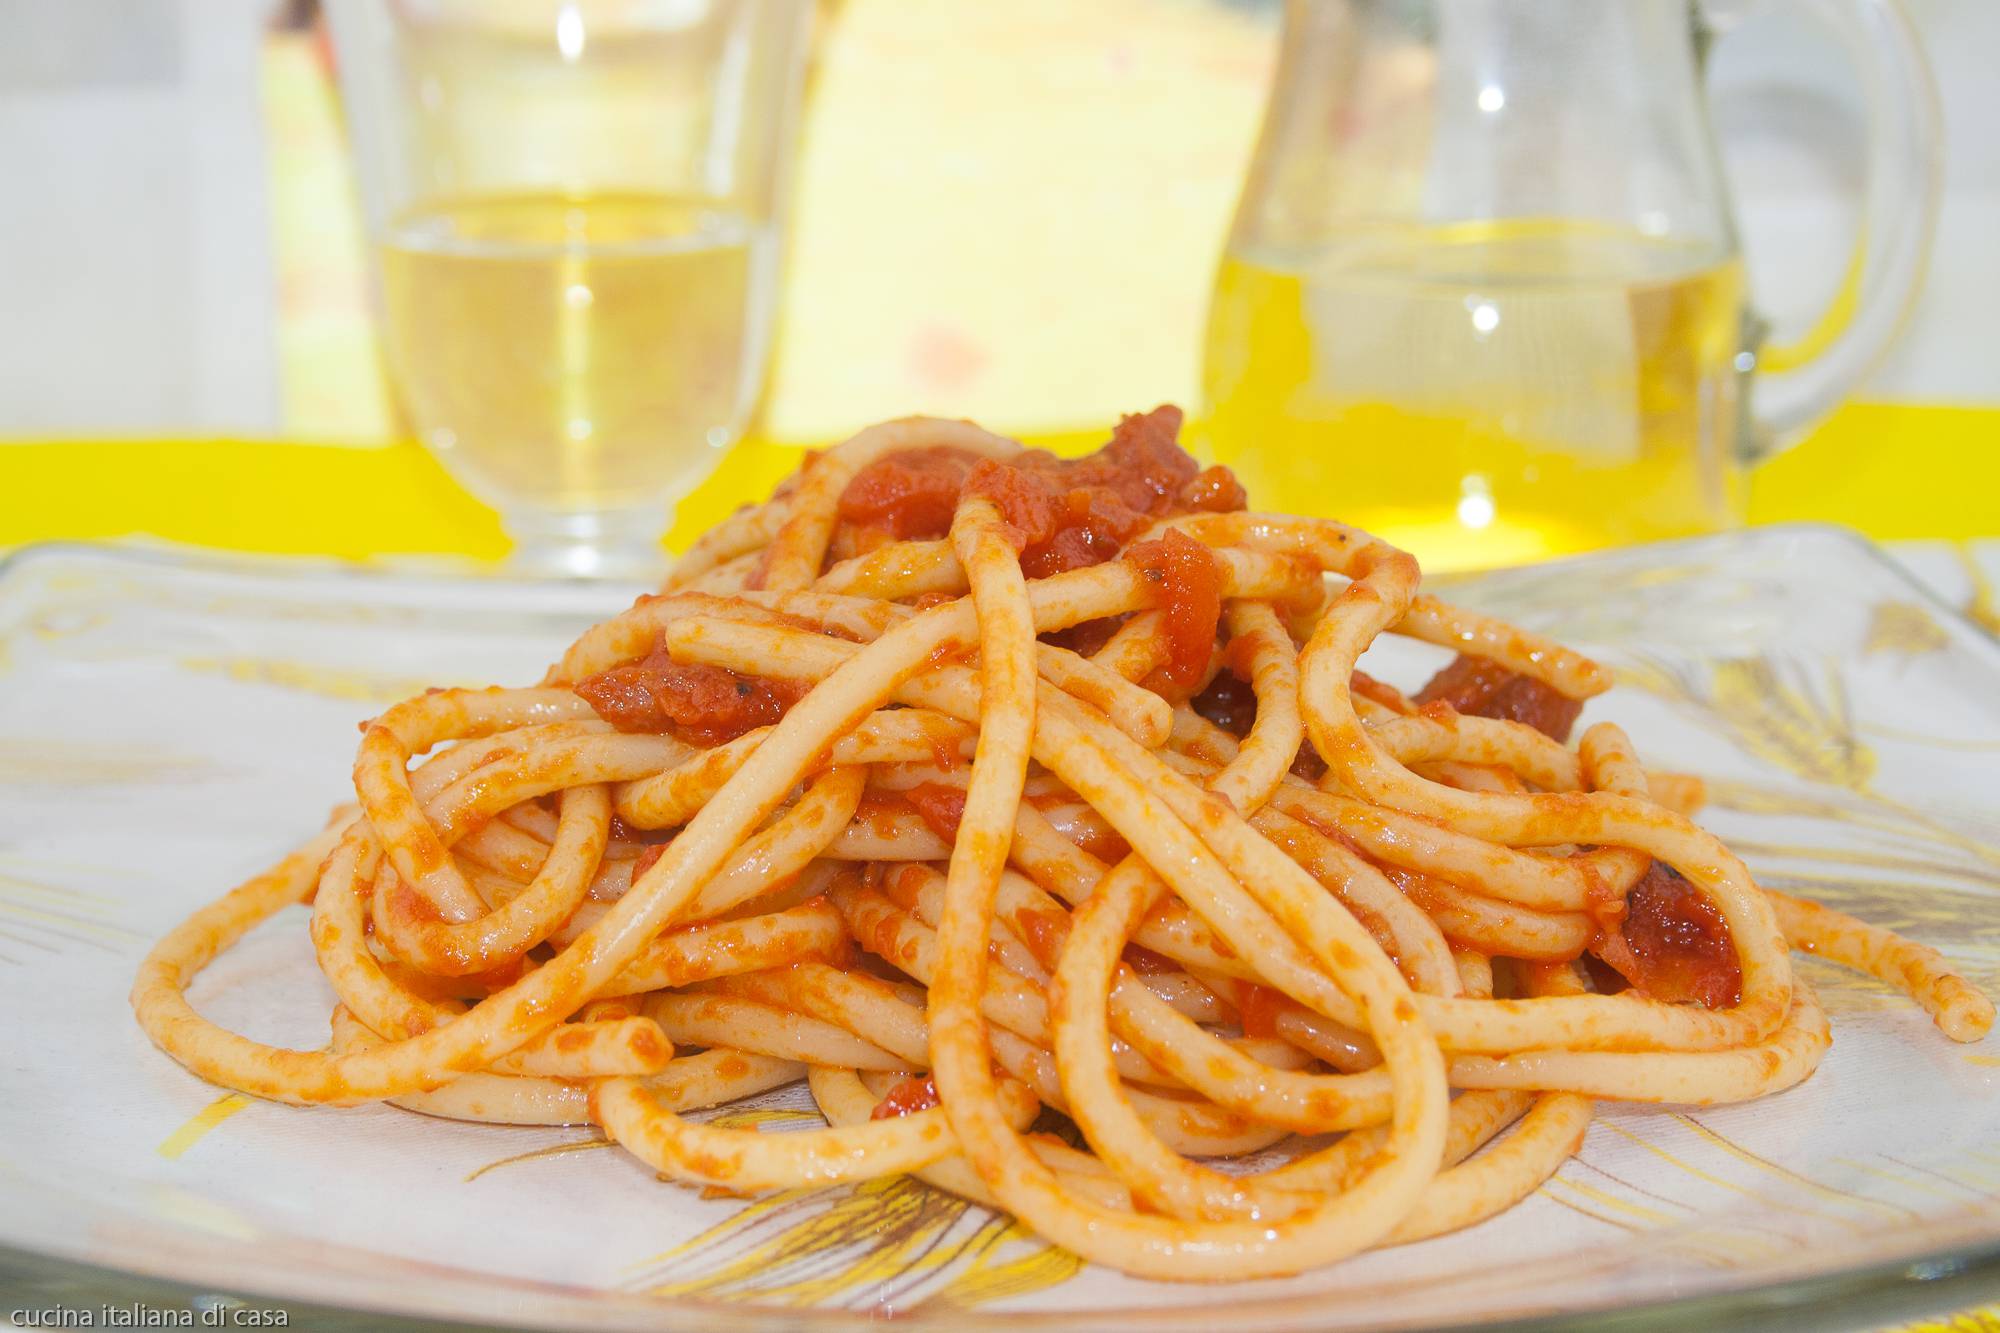 bucatini o spaghetti all'amatriciana, ricetta tradizionale